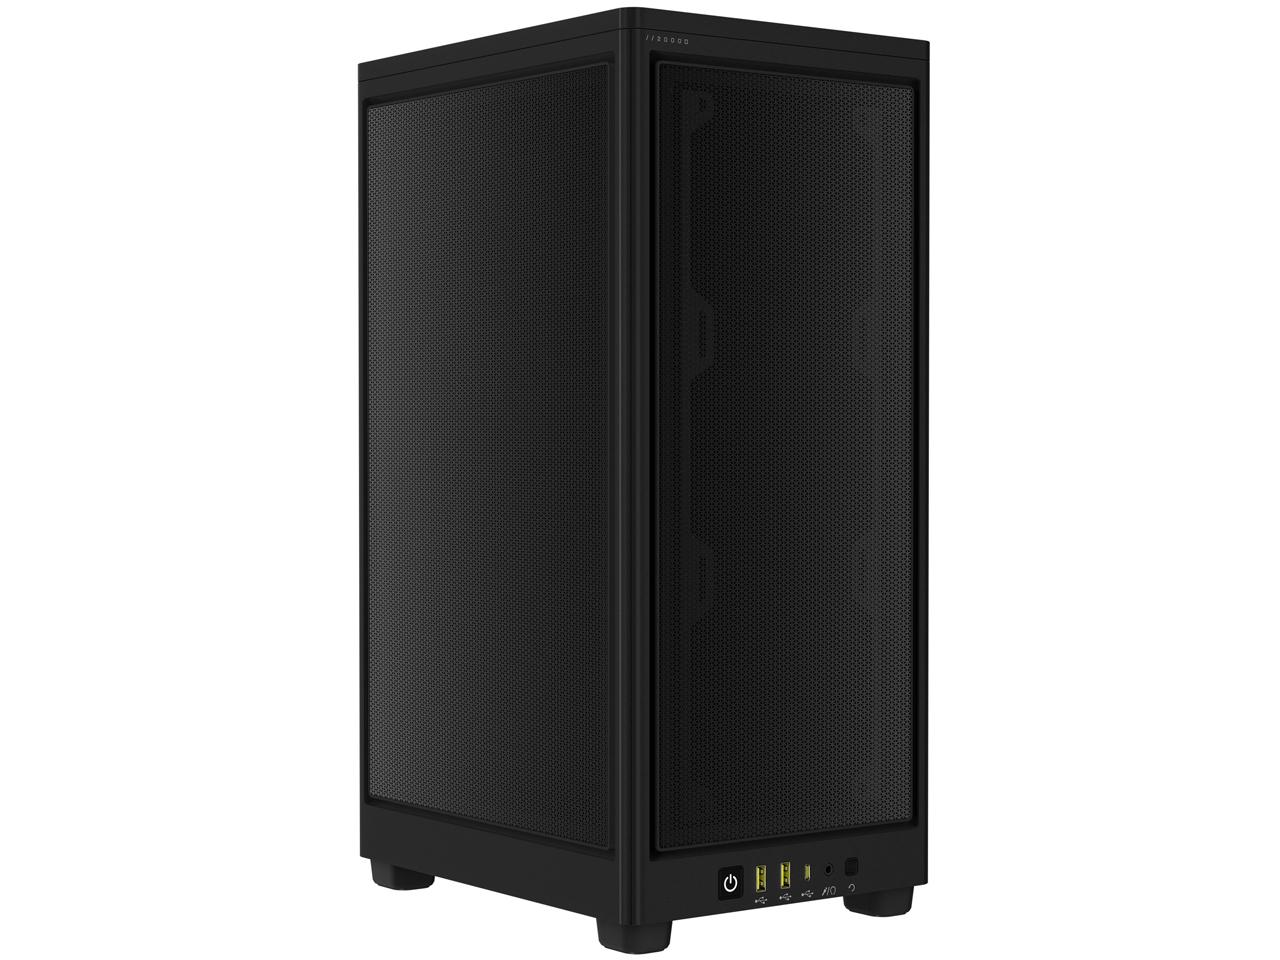 2000D AIRFLOW - ITX Tower - Black   (CC-9011244-WW)